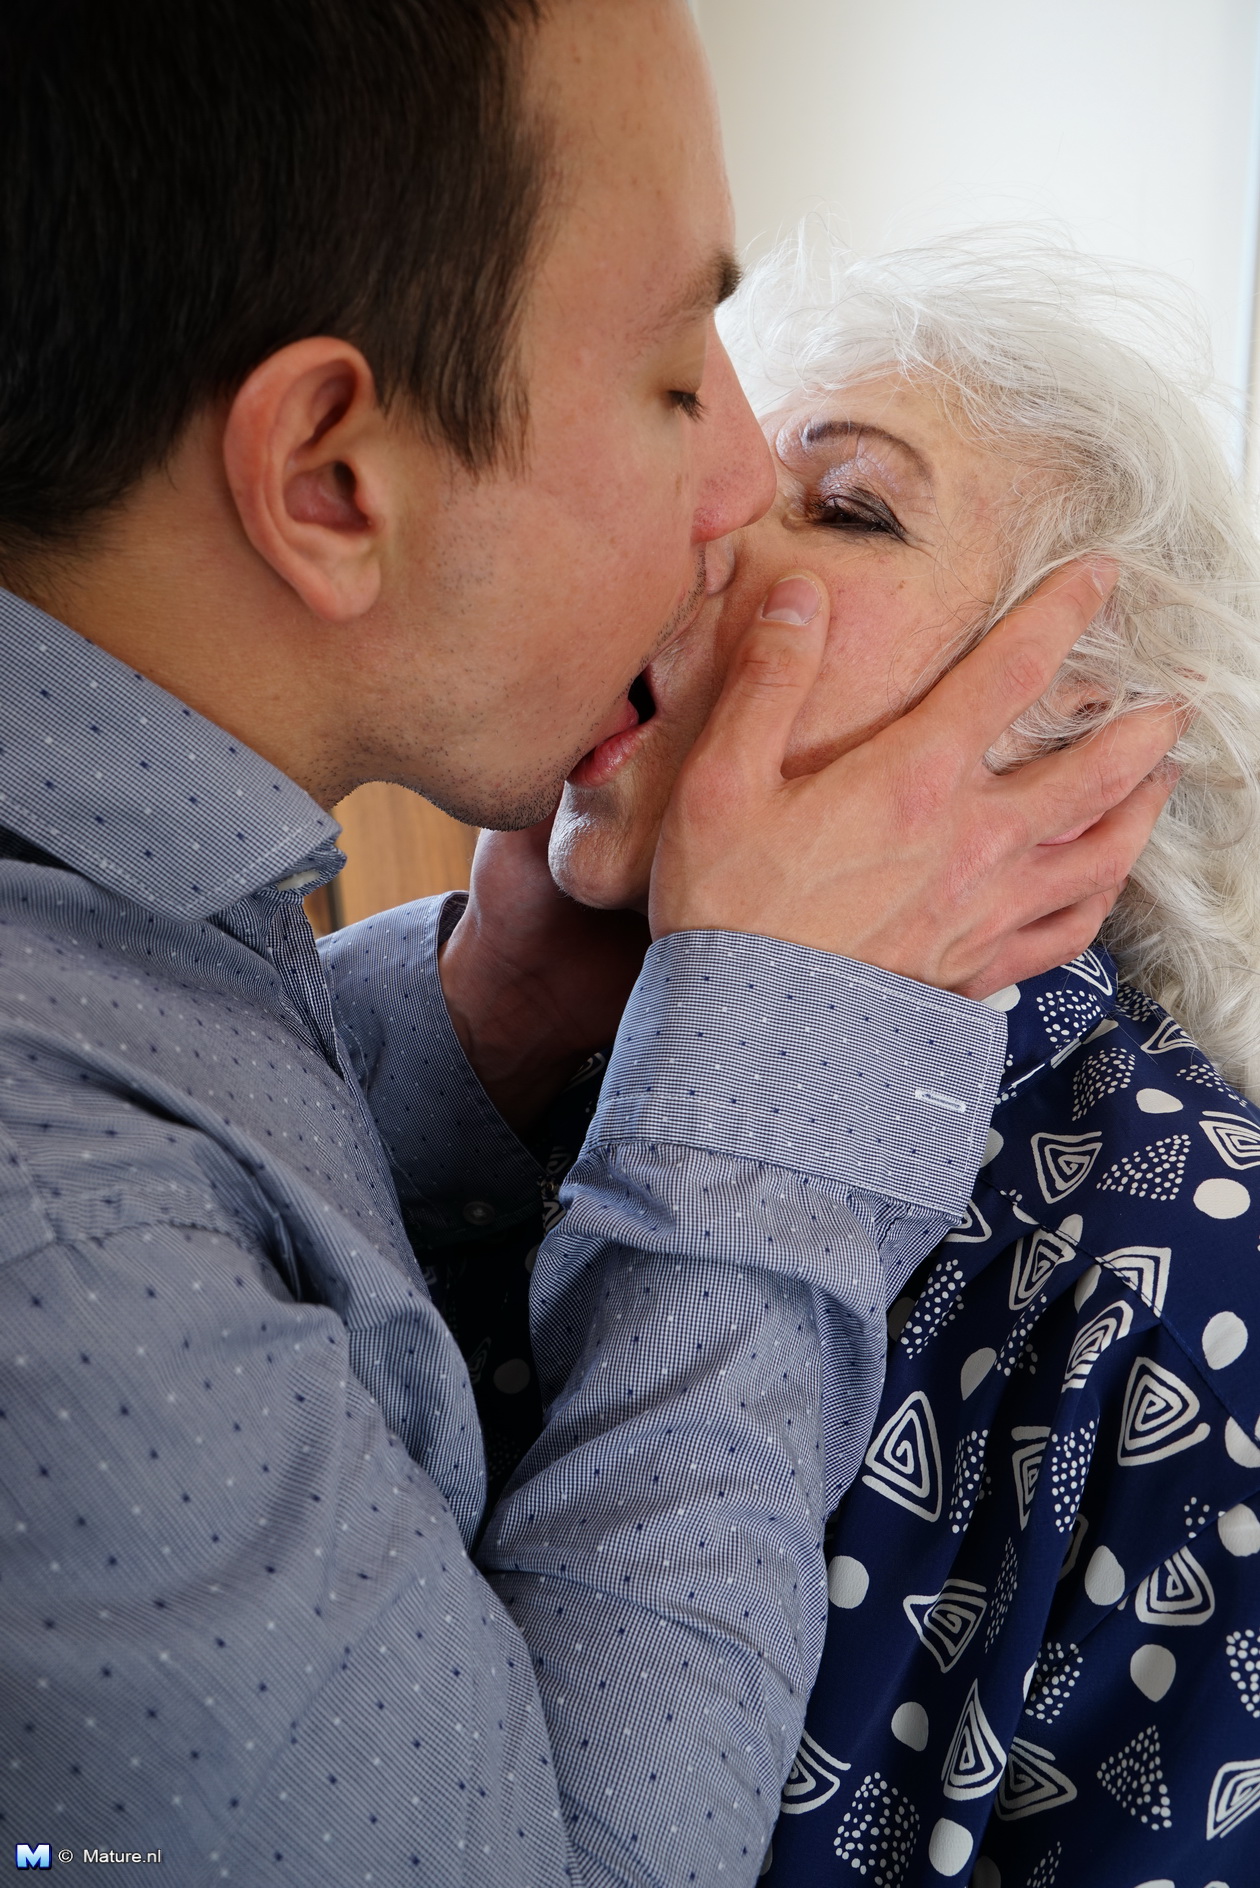 Old granny kissing